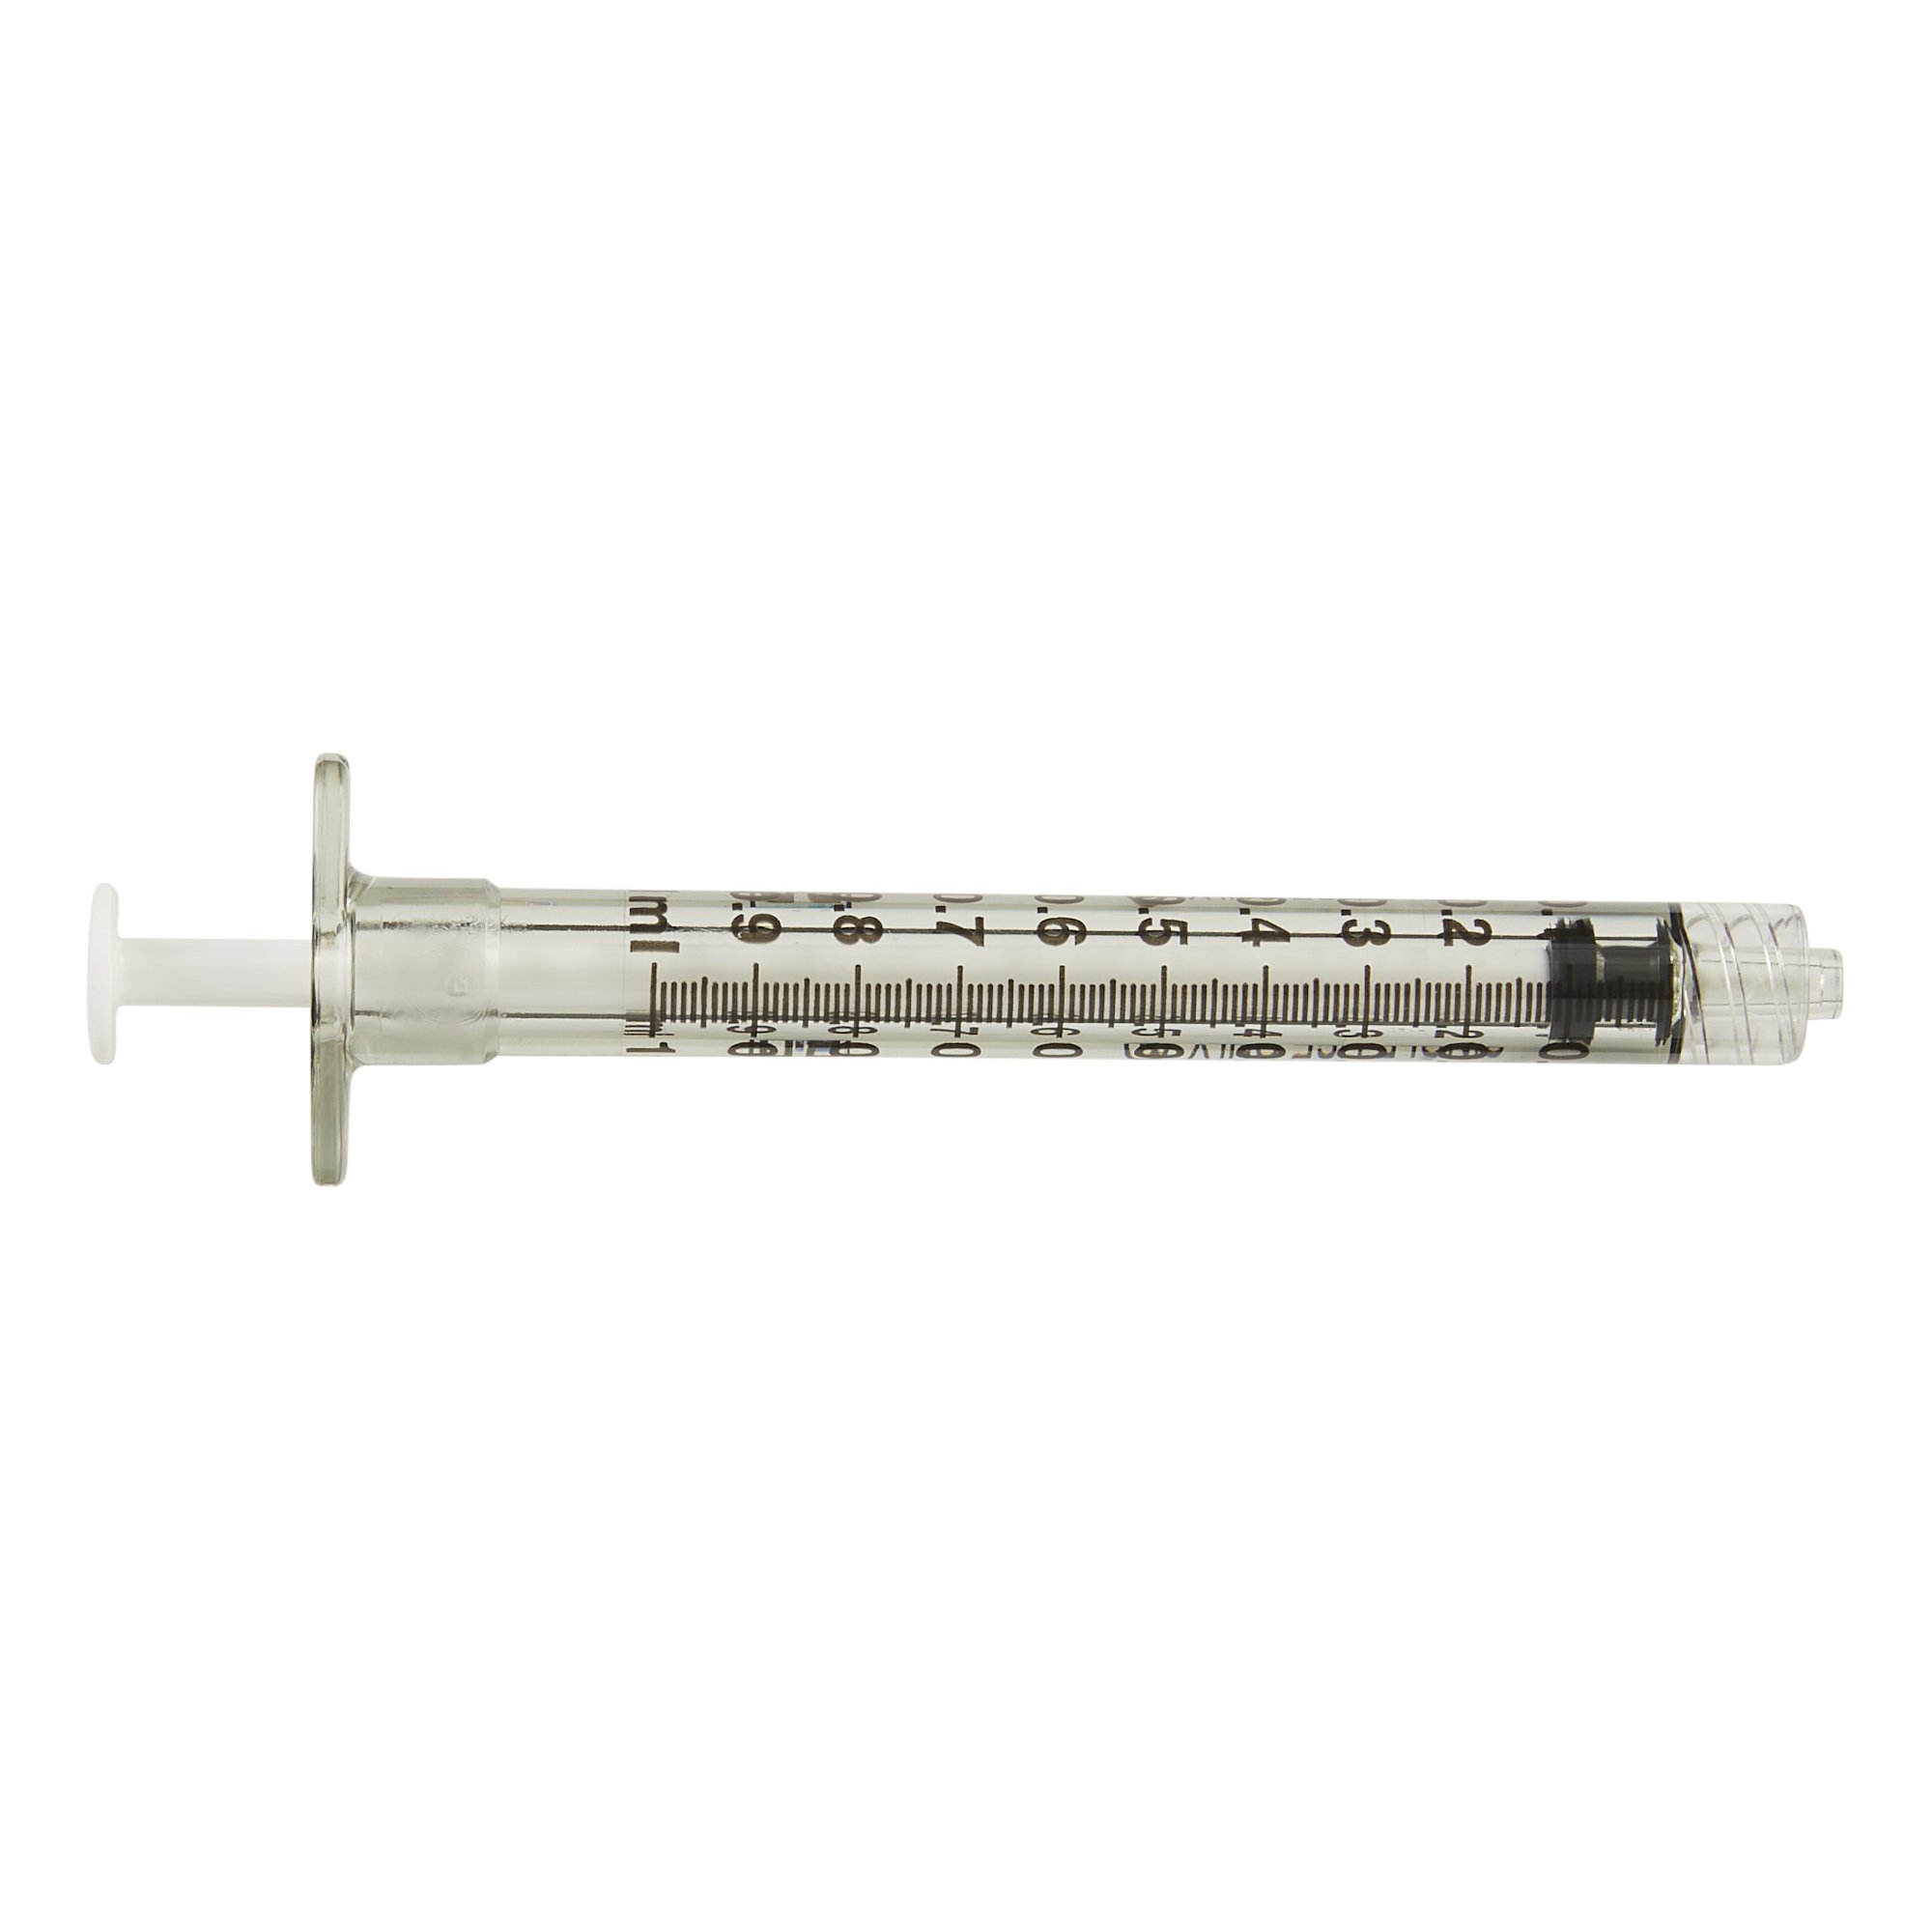 BD 309628 Luer-Lok Graduated Syringe sterile single use 1Ml 100 EA Needles and Syringes (IM & SC)